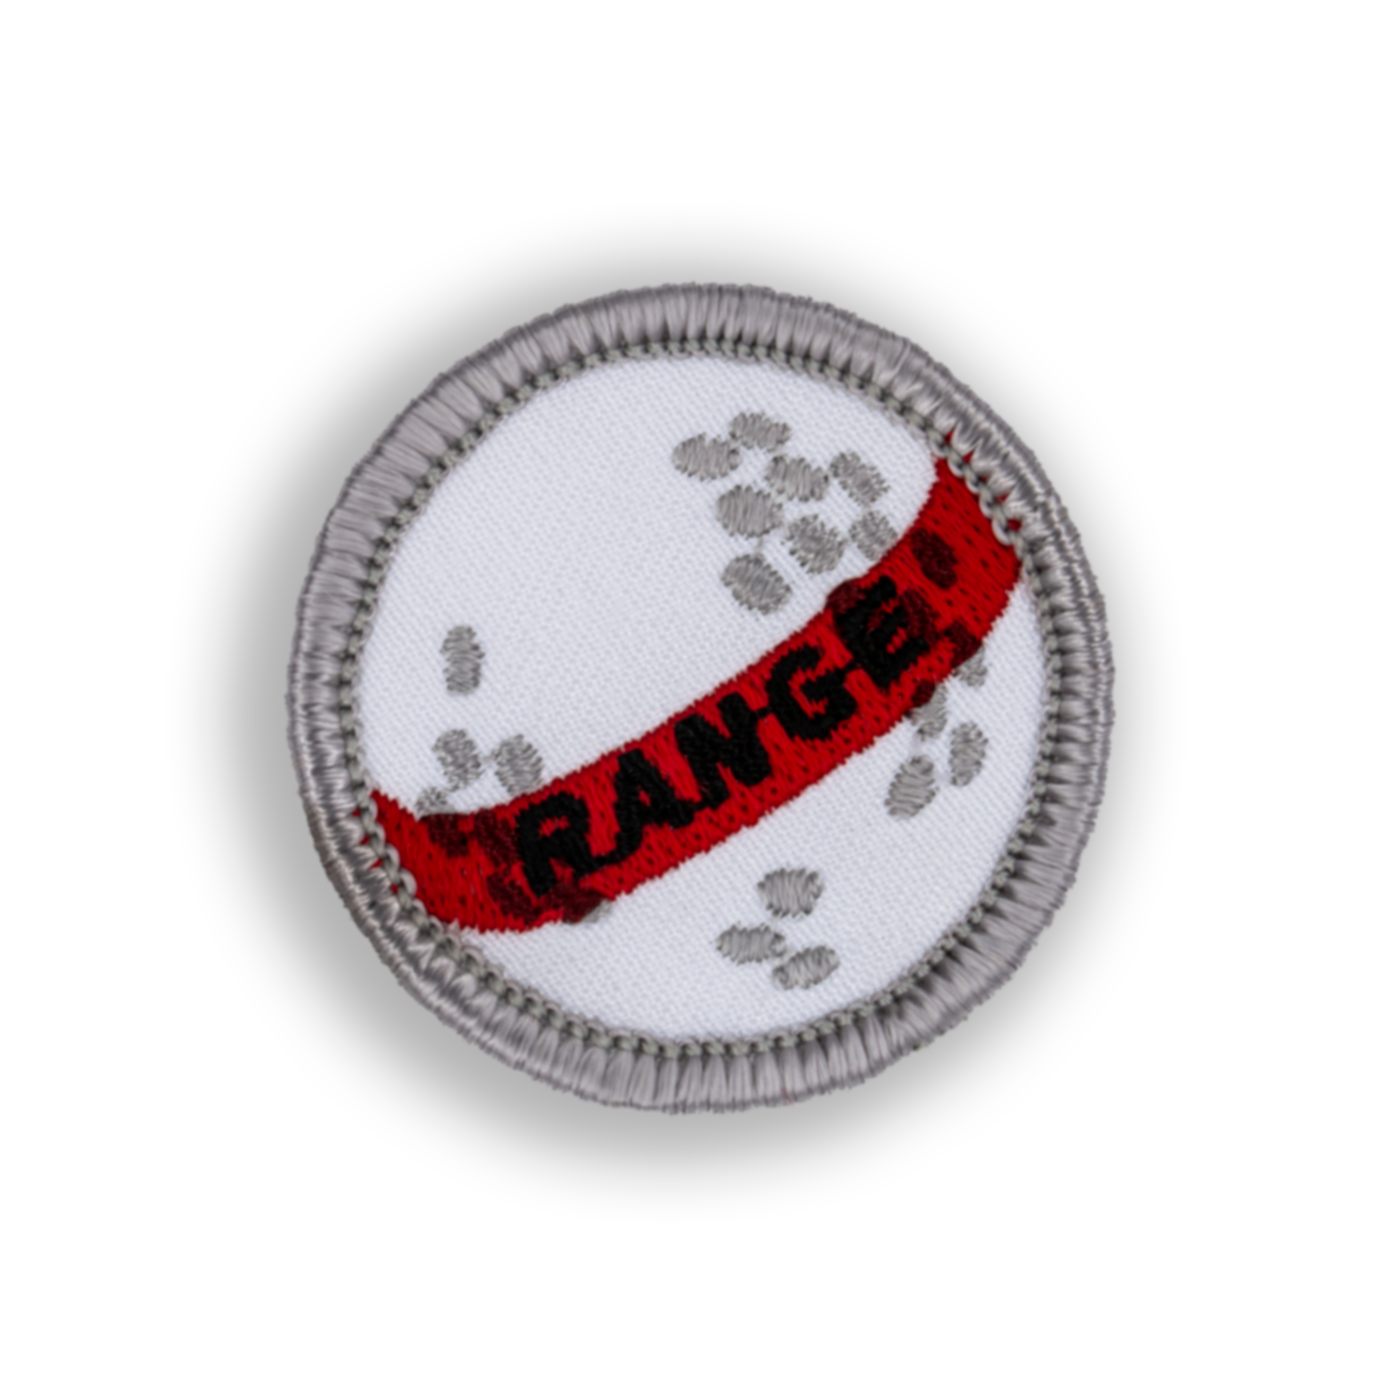 Range Ball Patch | Demerit Wear - Fake Merit Badges